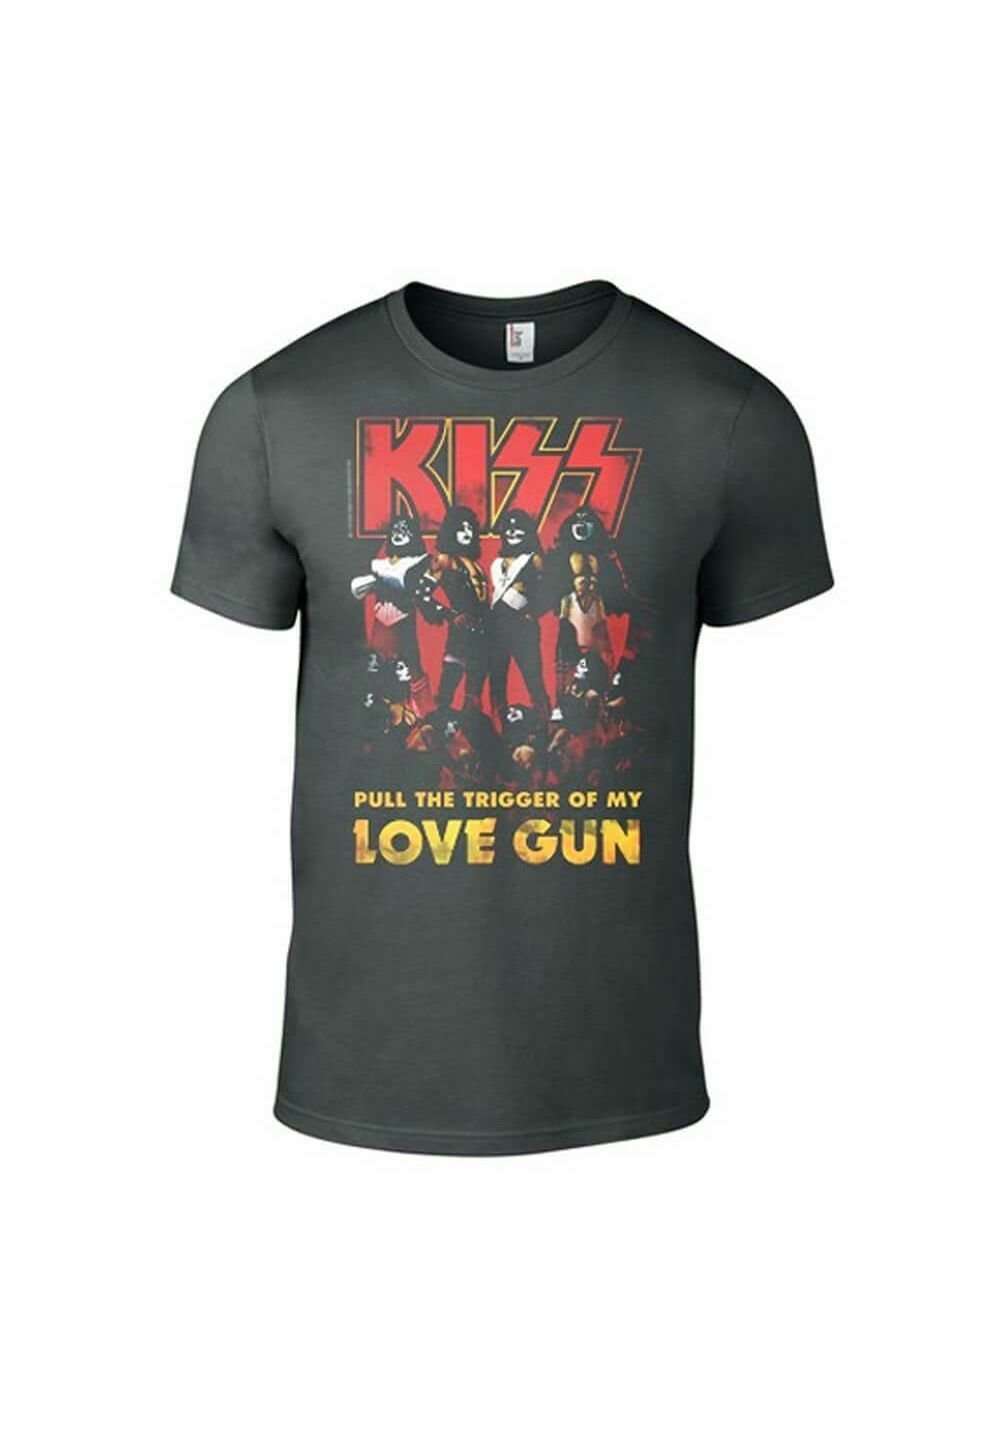 Футболка KISS LOVE GUN